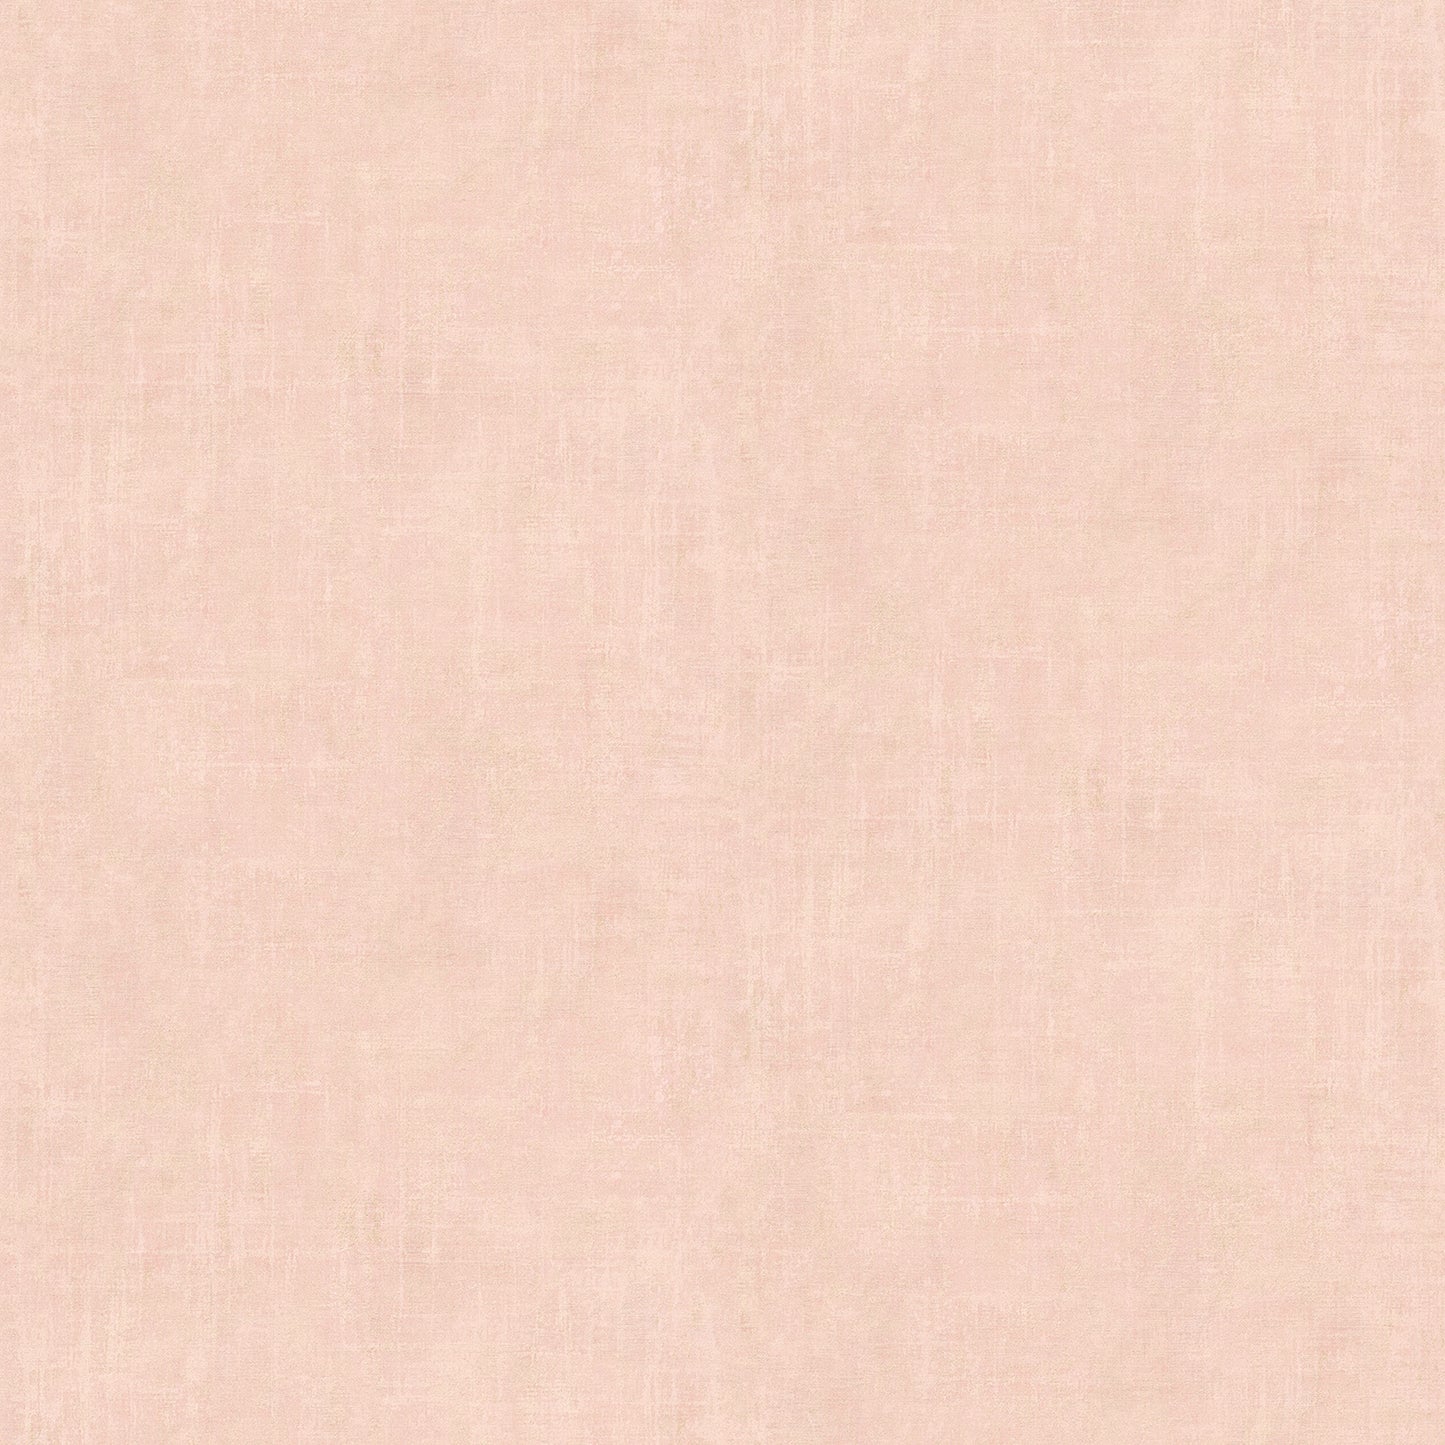 Buy 4044-38024-6 Cuba Riomar Blush Distressed Texture Wallpaper Pink by Advantage